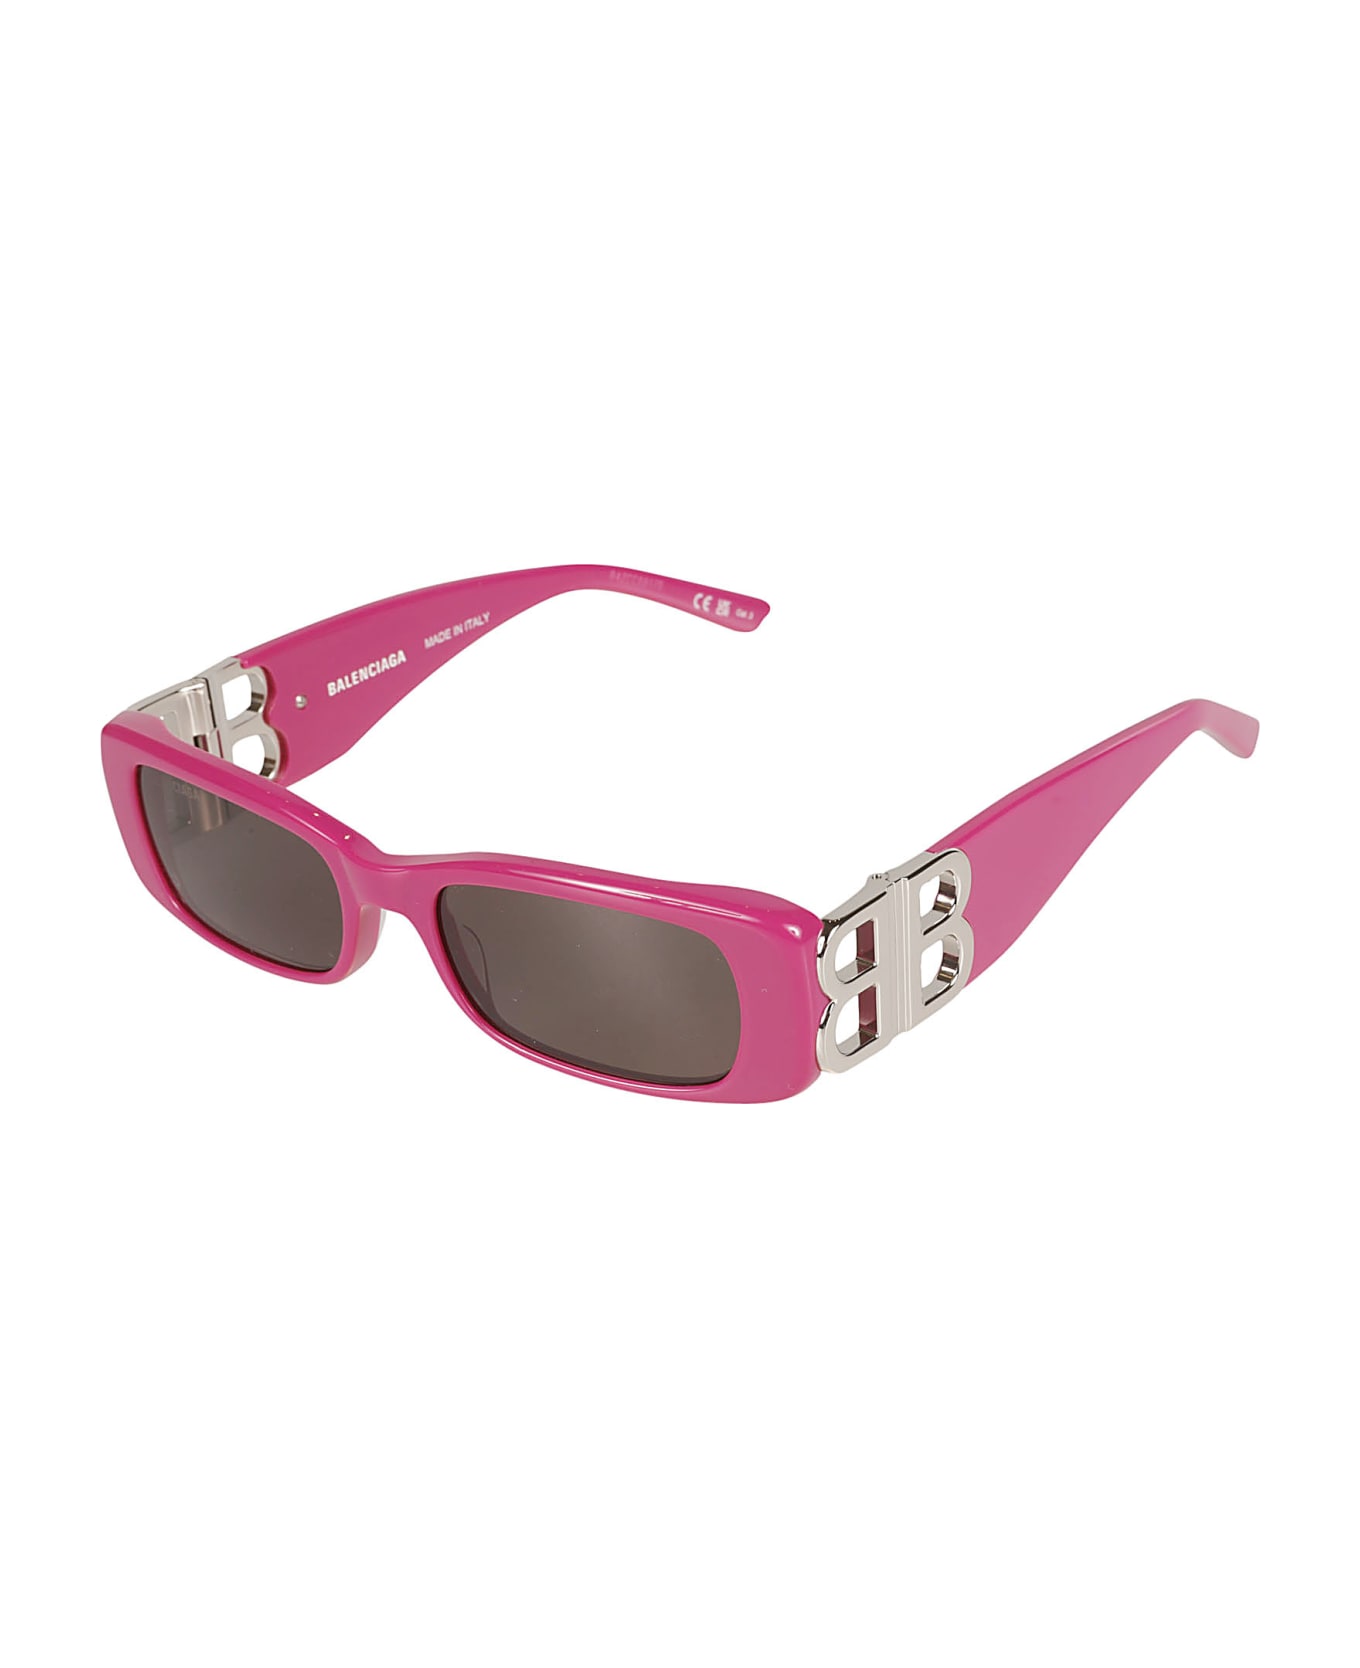 Balenciaga Eyewear Rectangular Bb Sunglasses - Fuchsia/Silver/Grey サングラス